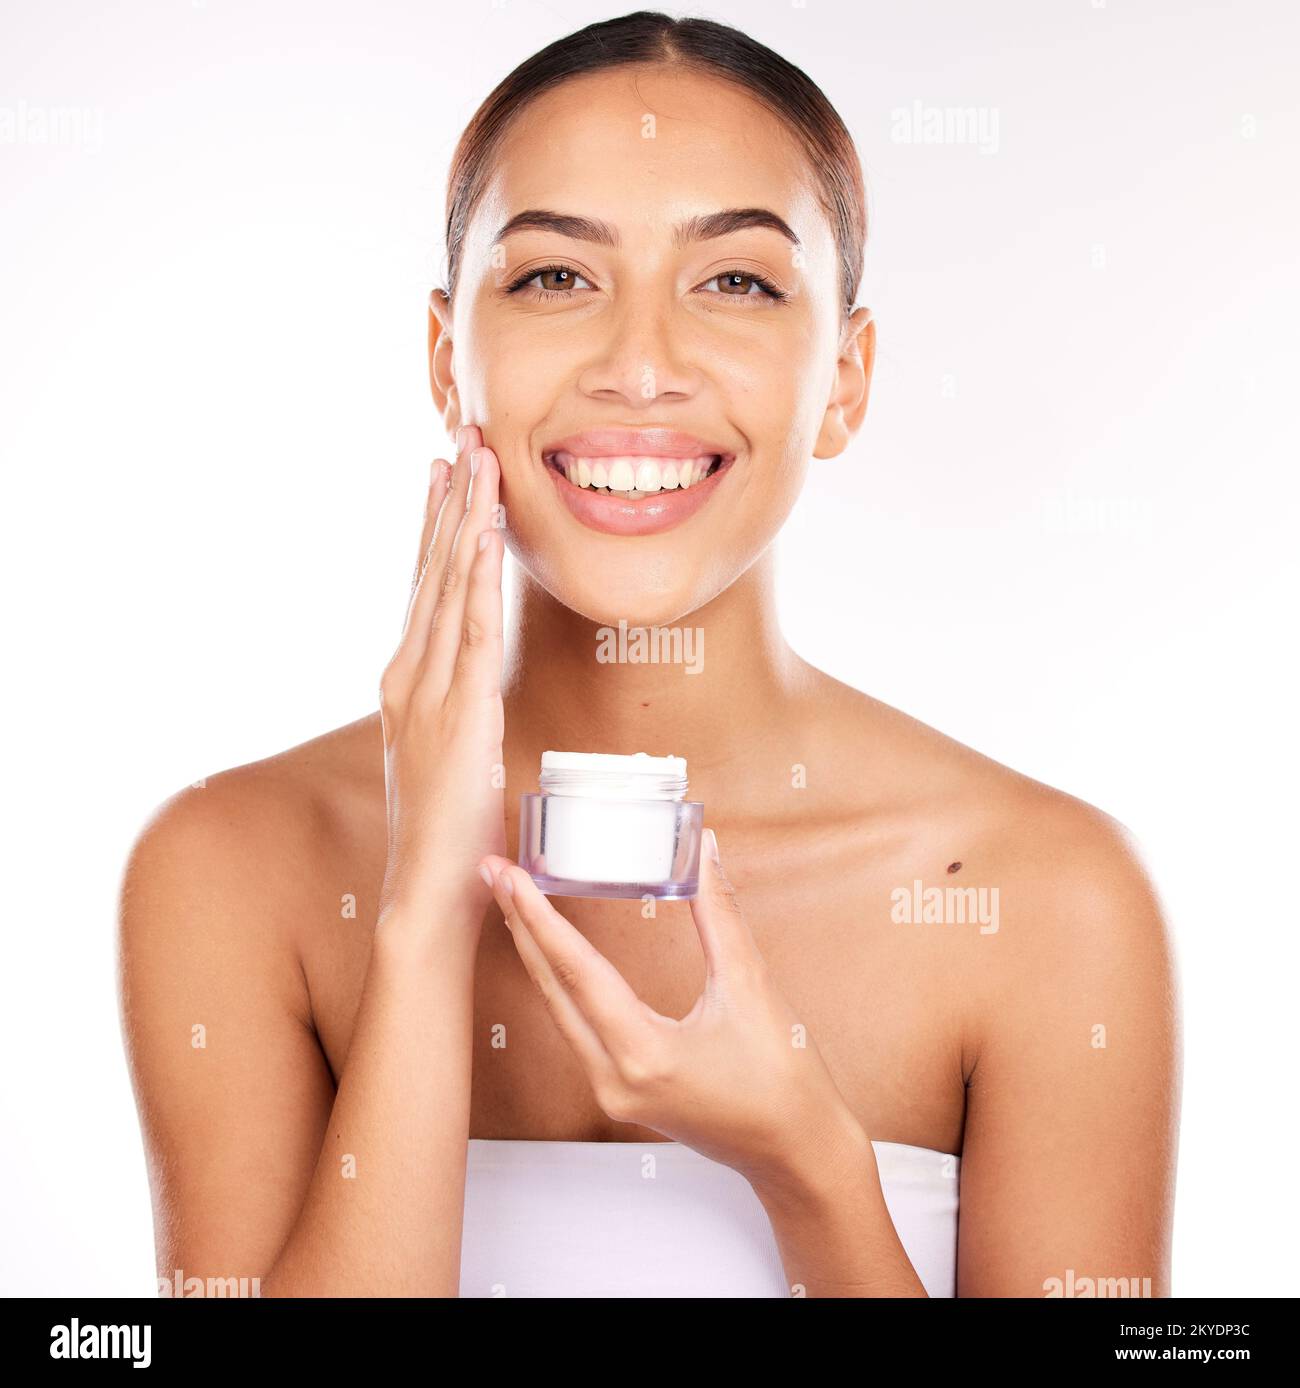 Premium Photo  Skincare smile and body cosmetics woman happy and